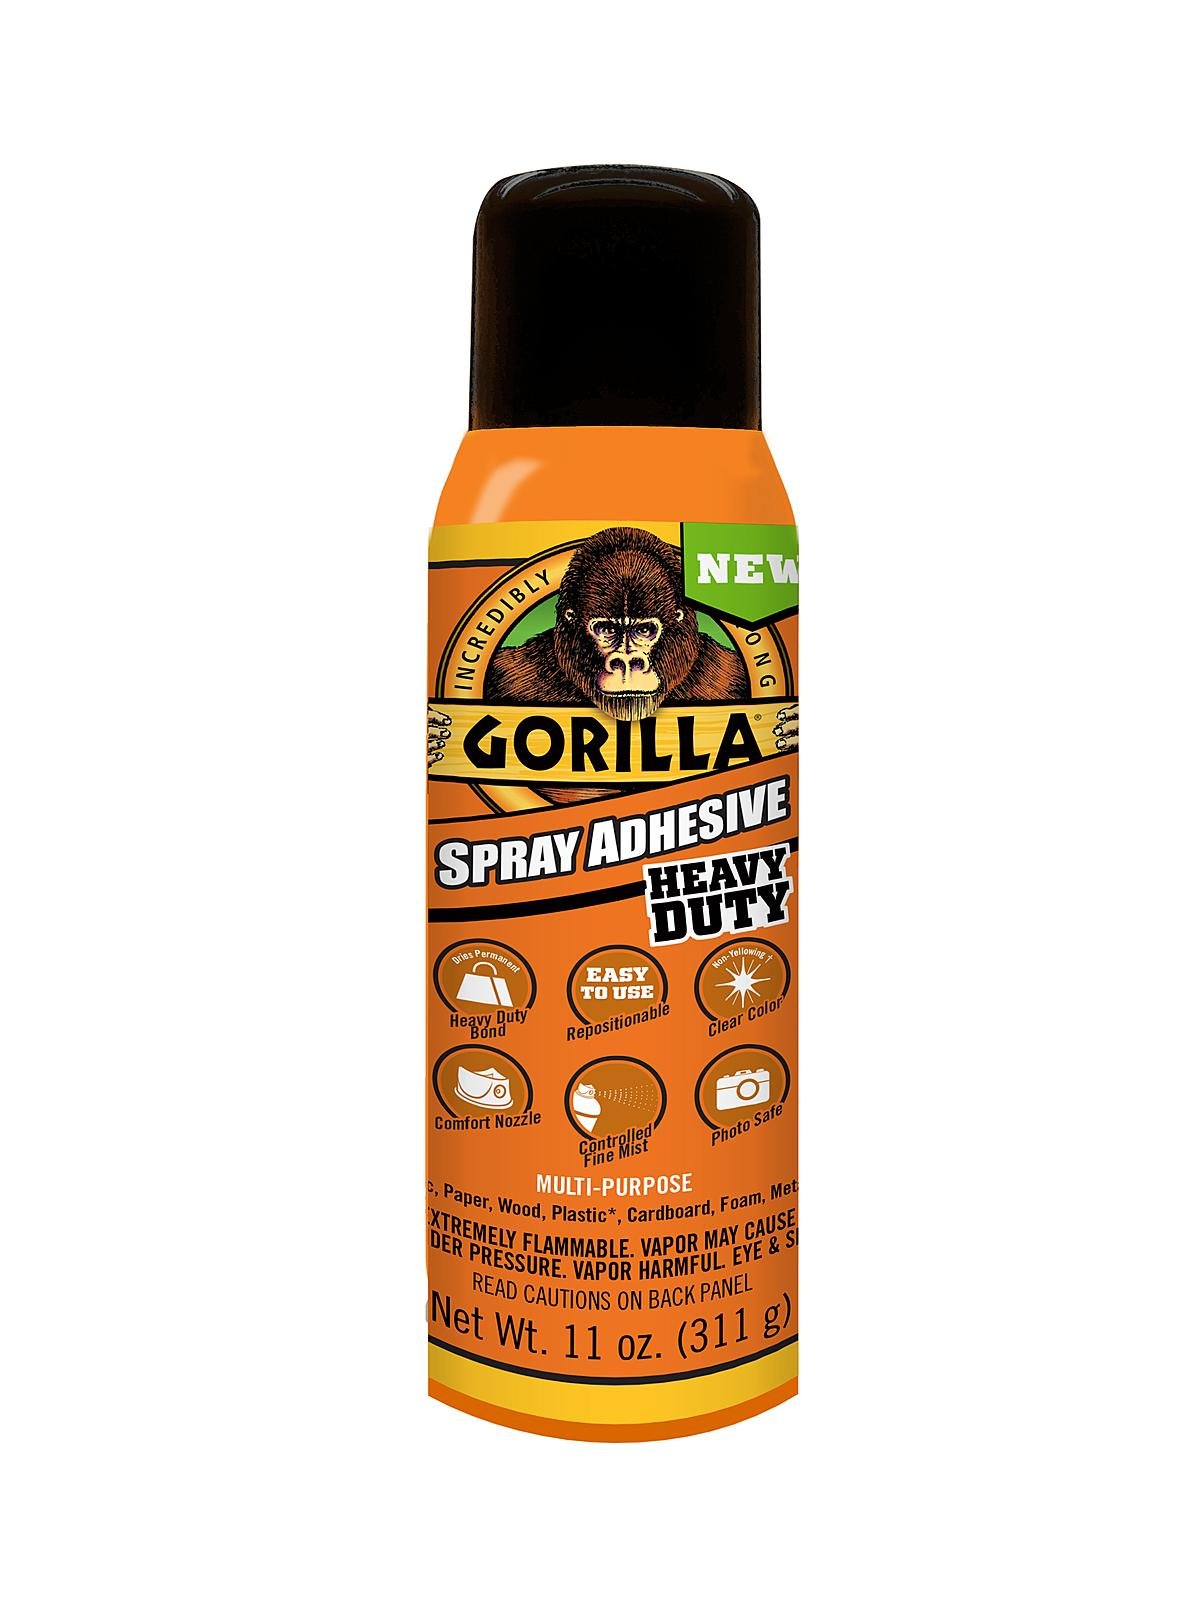 New from Gorilla: Mounting Tape - The Gorilla Glue Company